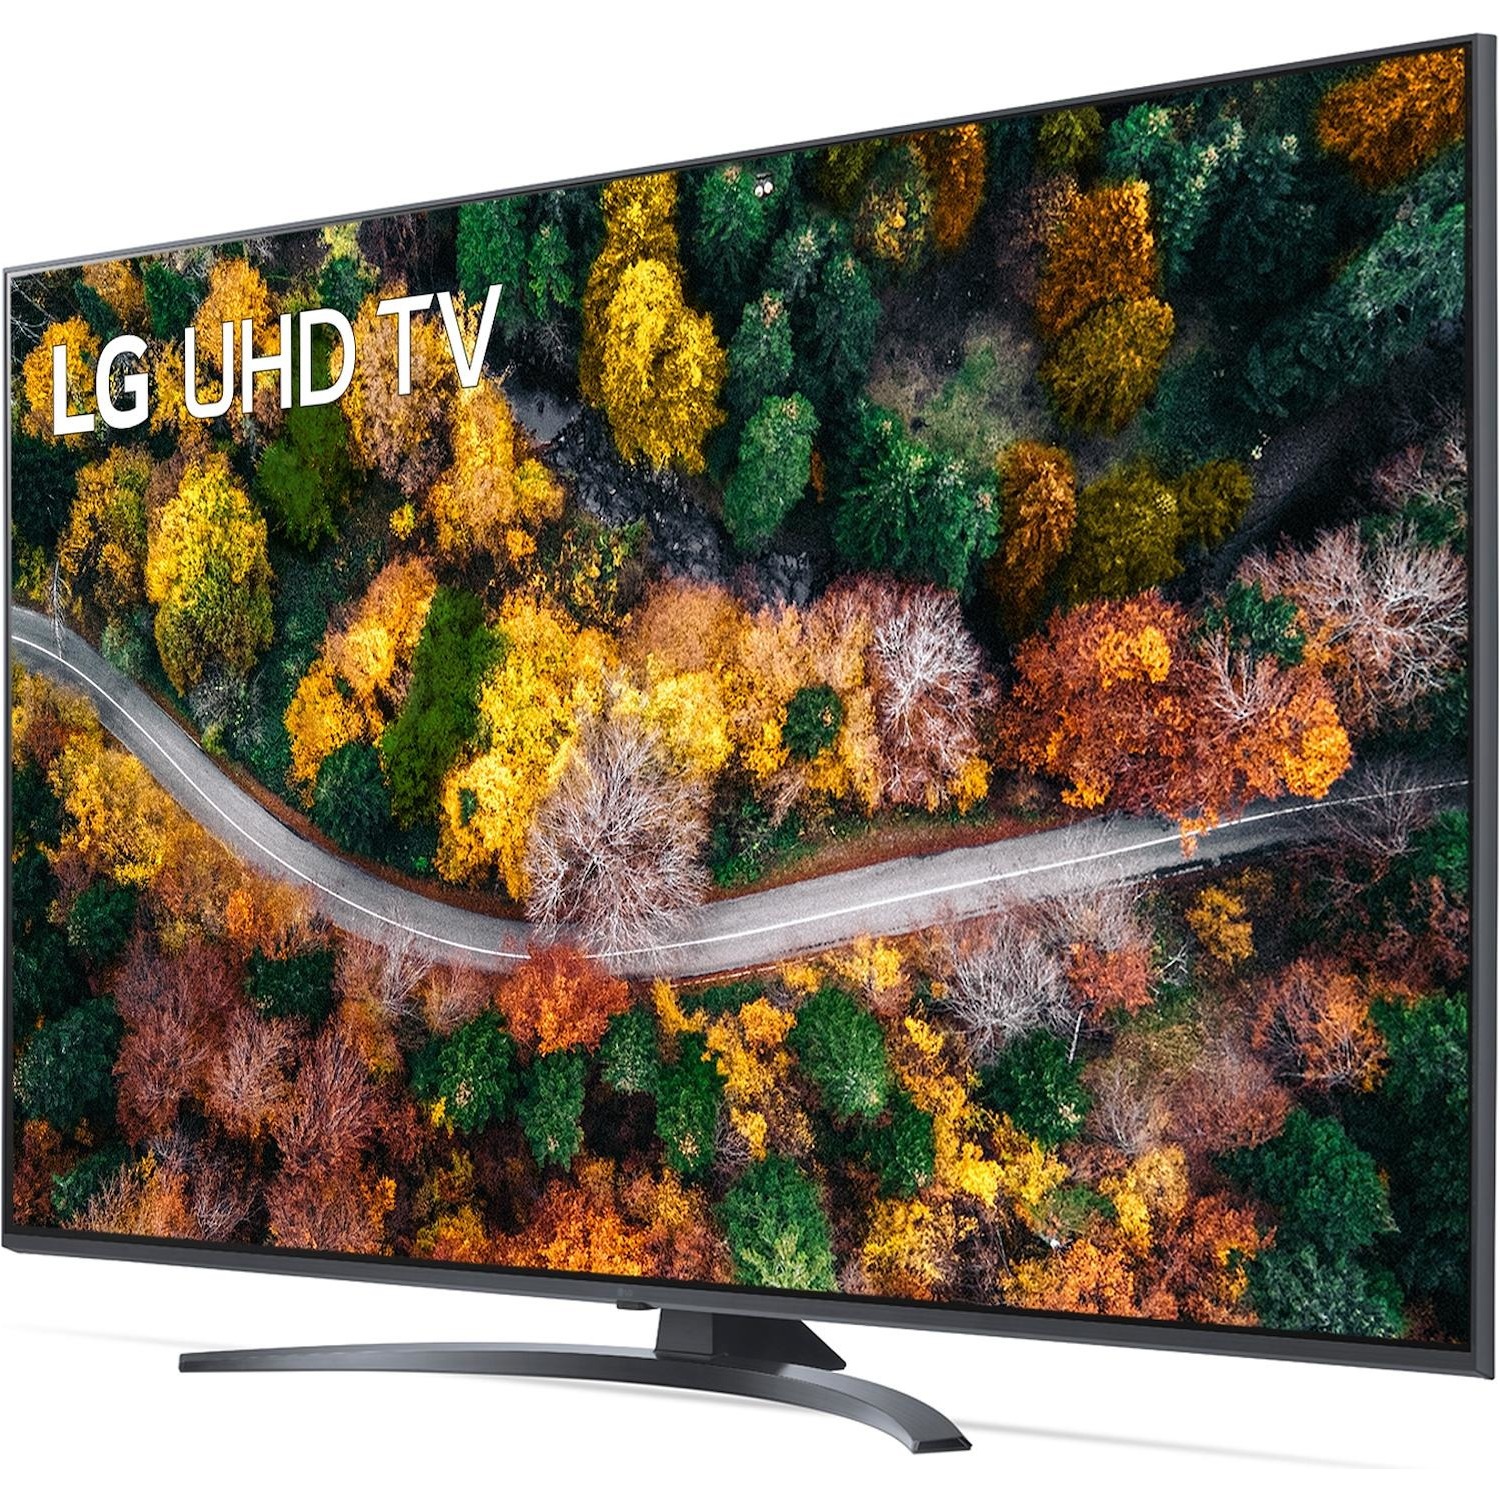 Immagine per TV LED Smart 4K UHD LG 50UP78006 da DIMOStore